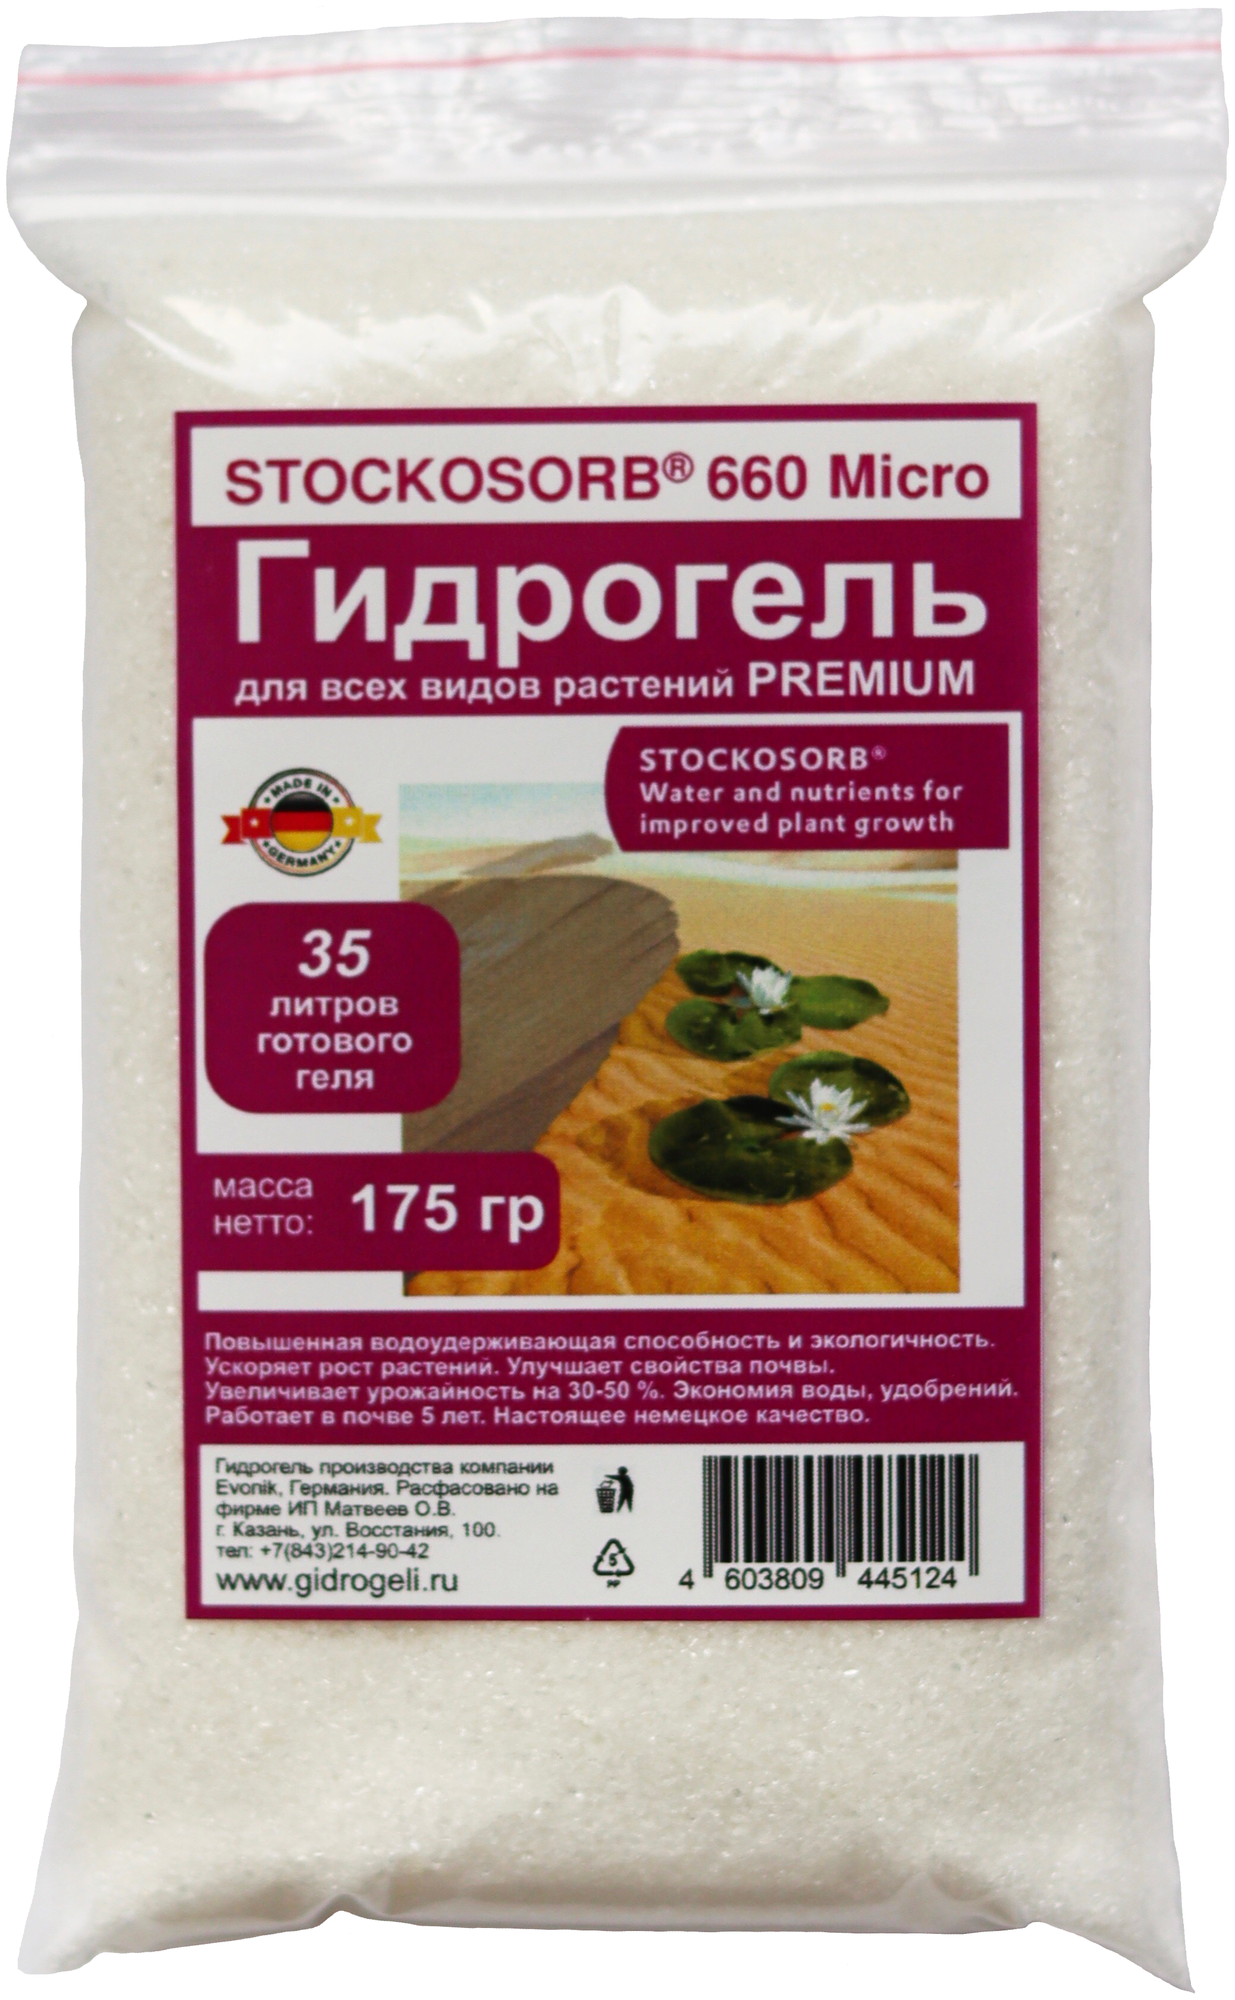 Гидрогель Stockosorb 660 Micro Вес 175 гр. Германия. ЭКО.